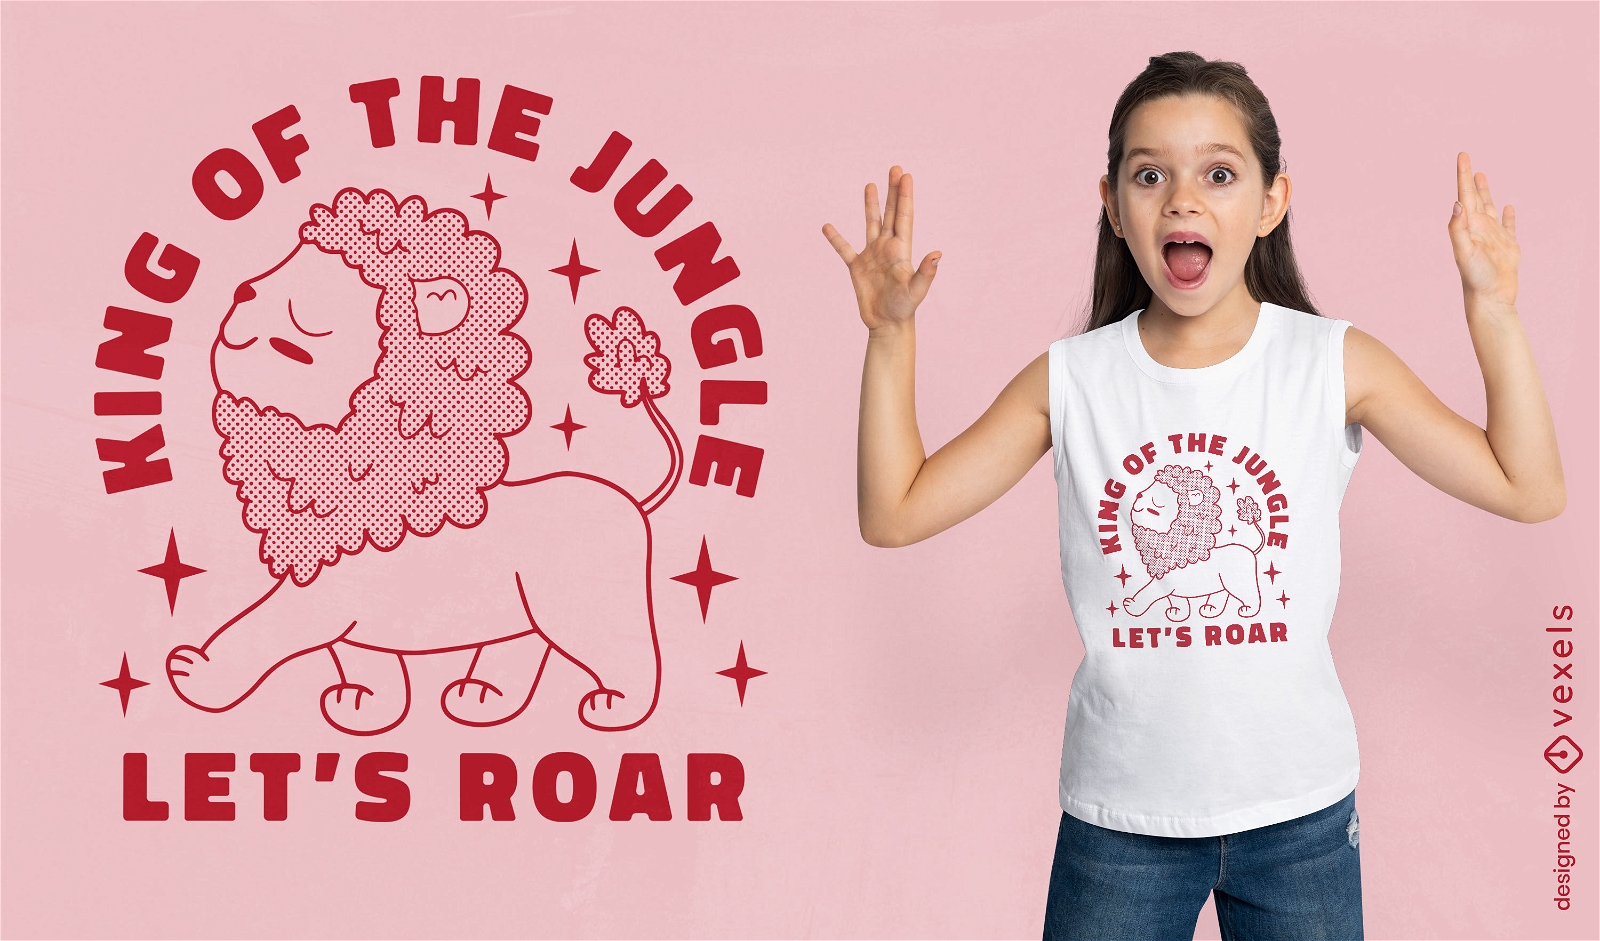 King of the jungle children's lion t-shirt design